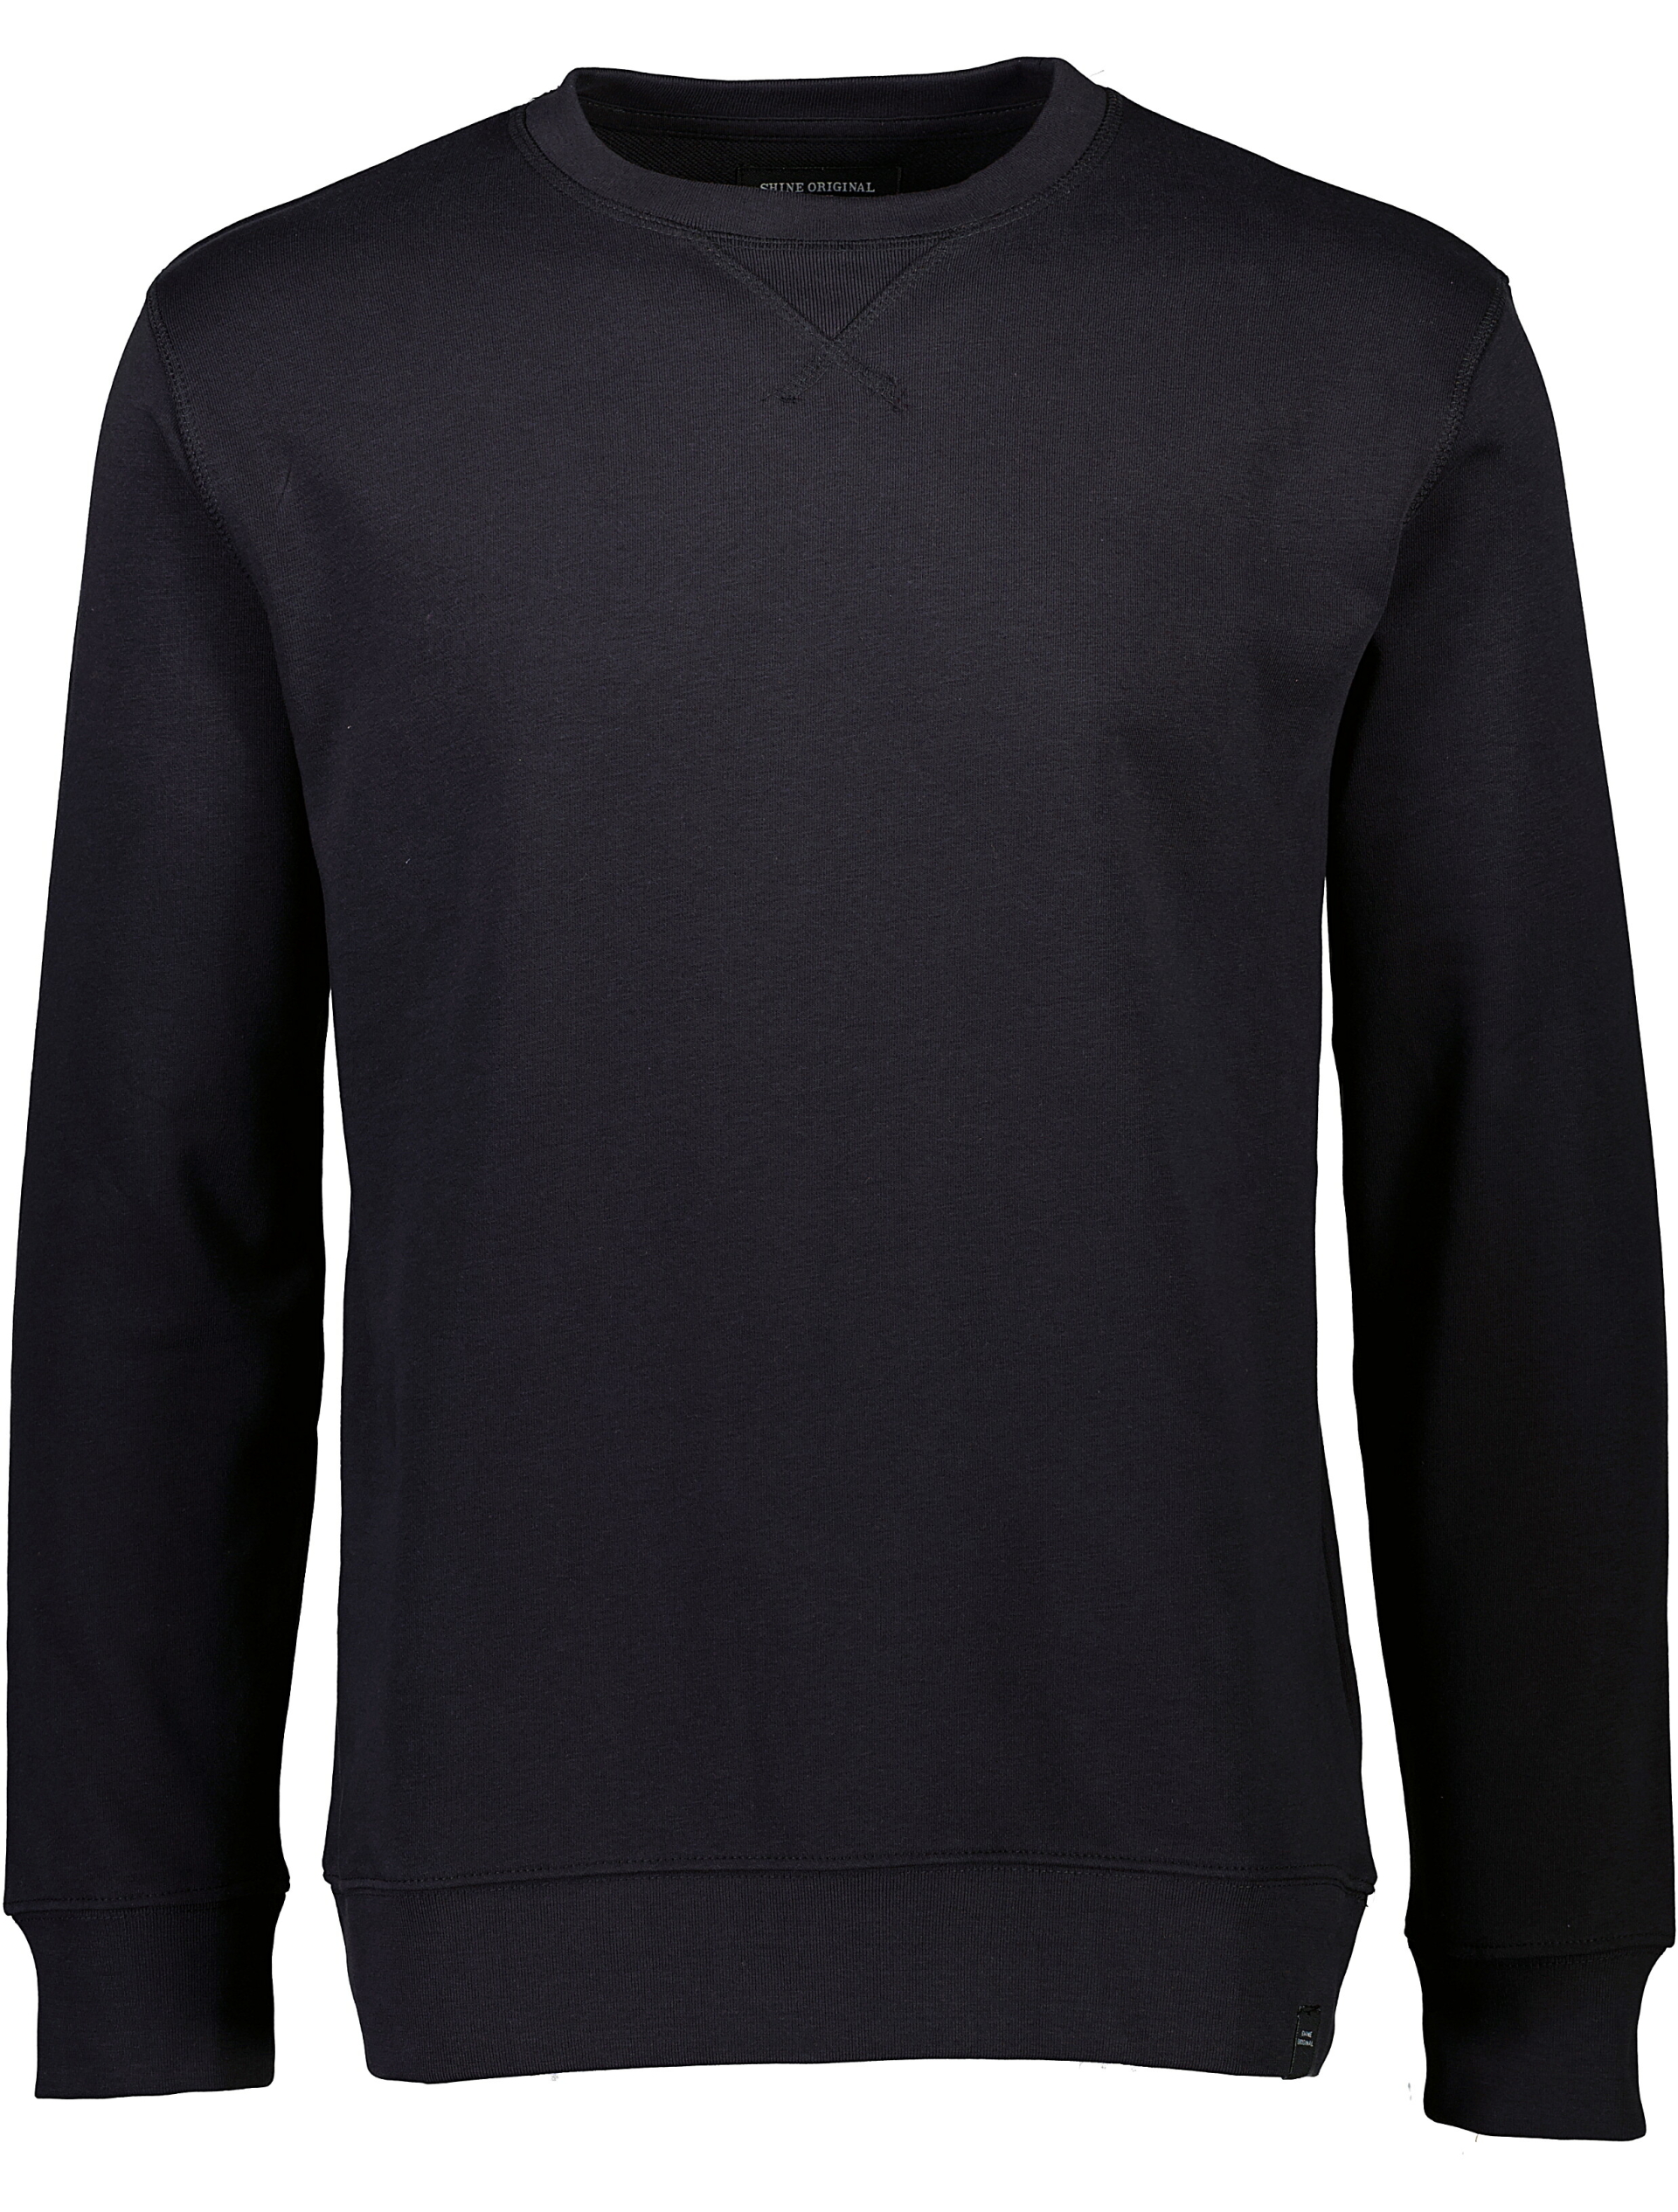 Shine Original Sweatshirt sort / black